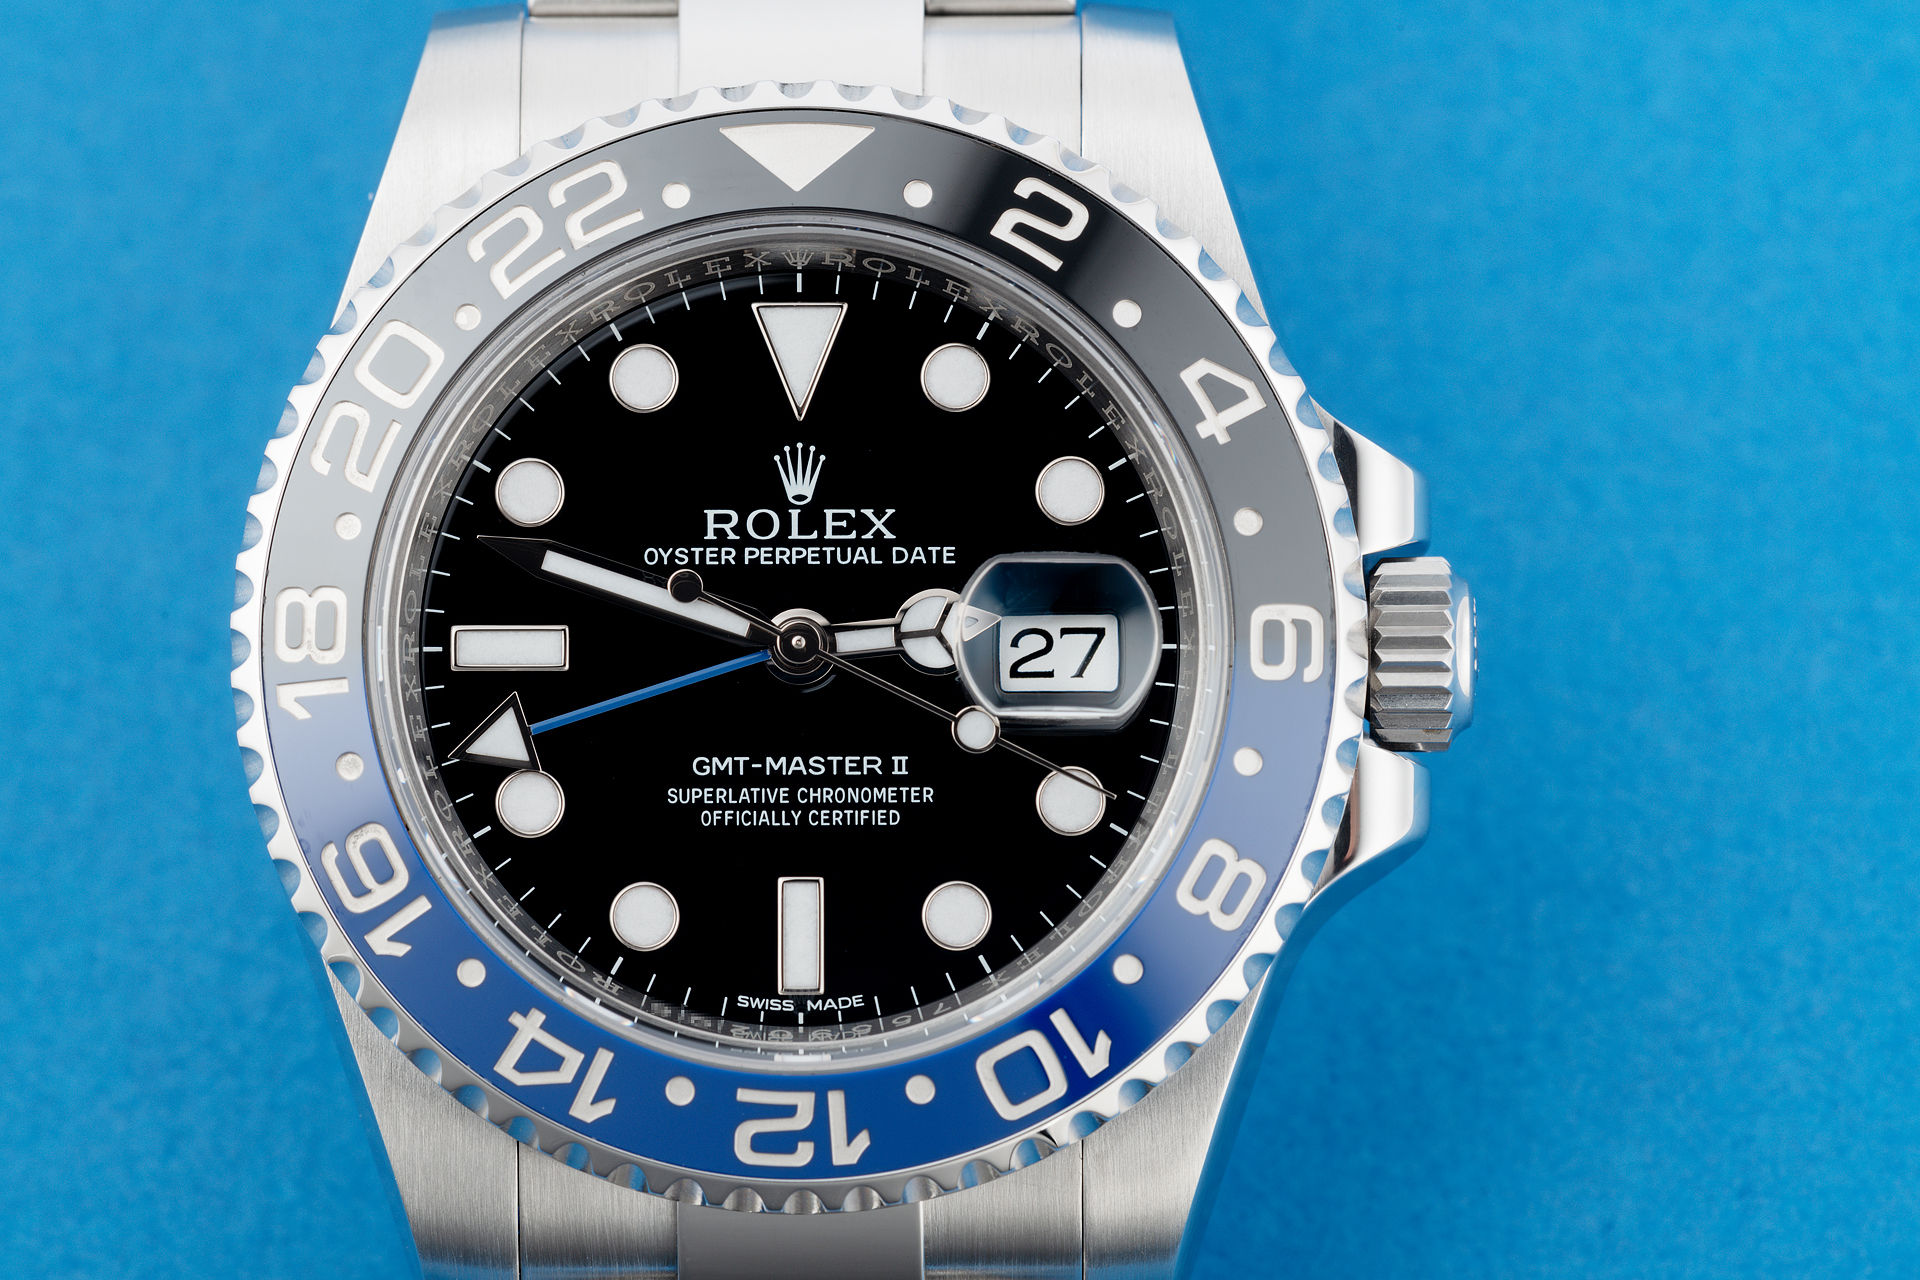 ref 116710BLNR | 'Full Set' Discontinued Model | Rolex GMT-Master II